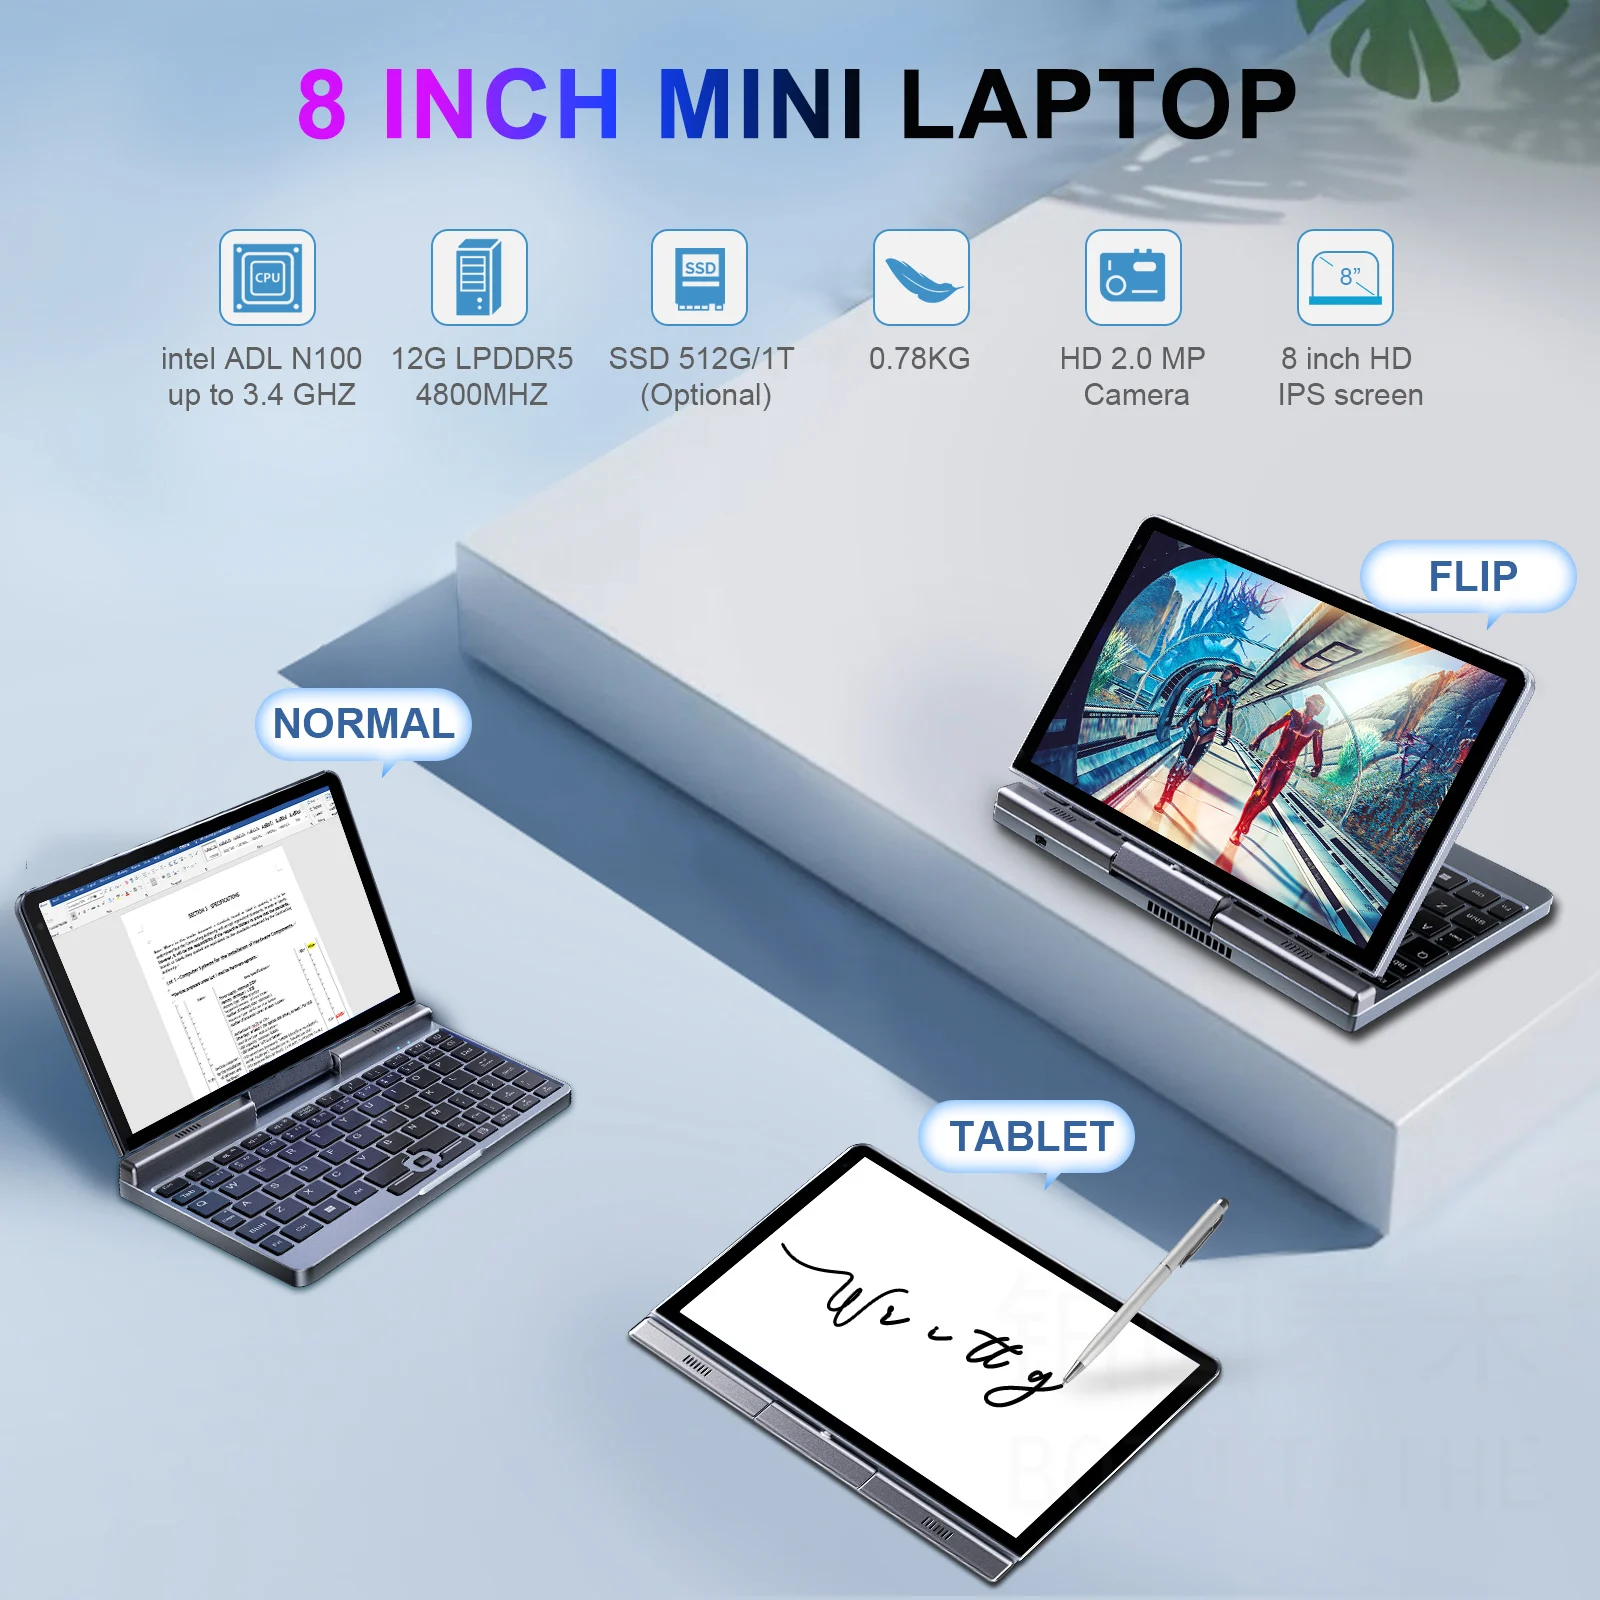 12th Gen Intel Alder Lake N100 Mini Gaming Laptop 8 Inch Touch Screen 12G  DDR5 Windows 11 Notebook Pocket Computer 2 in 1 WiFi6